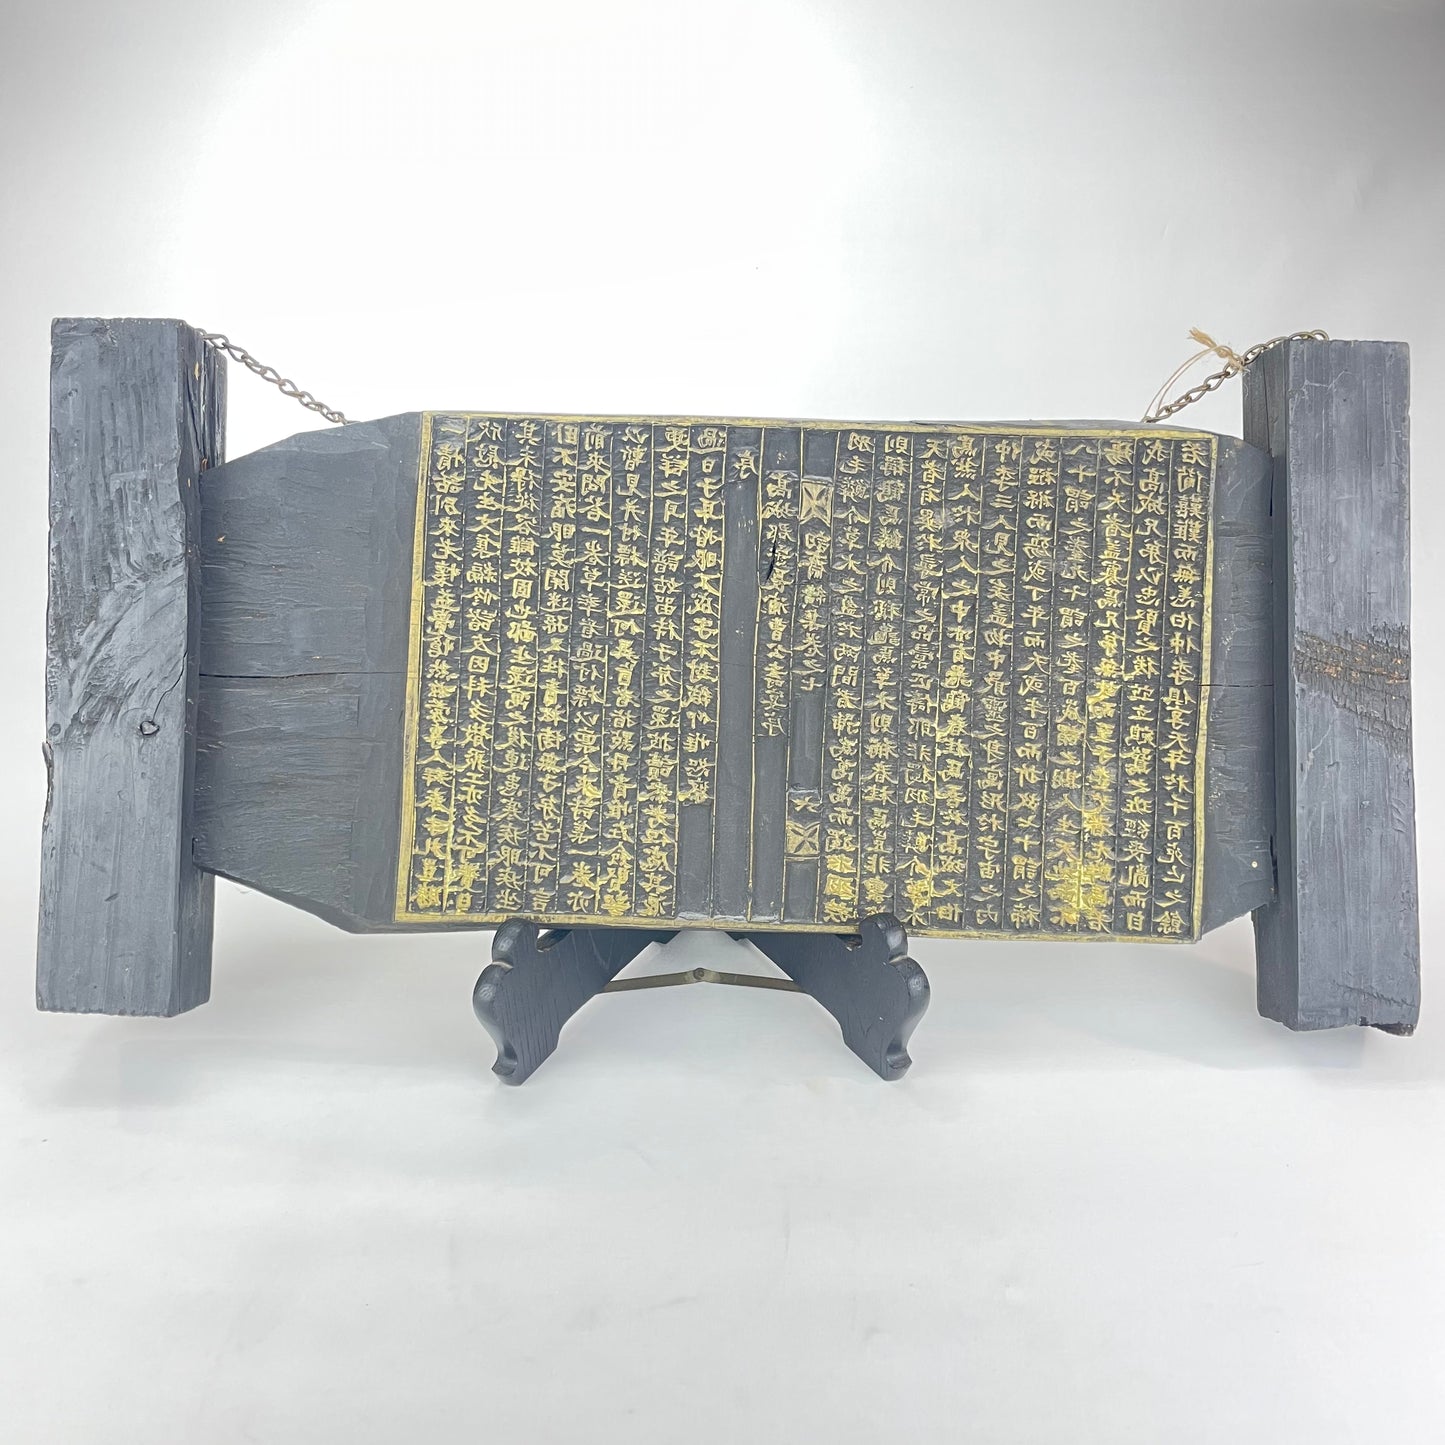 Antique Carved Wood Block sacred text blocks hanging art